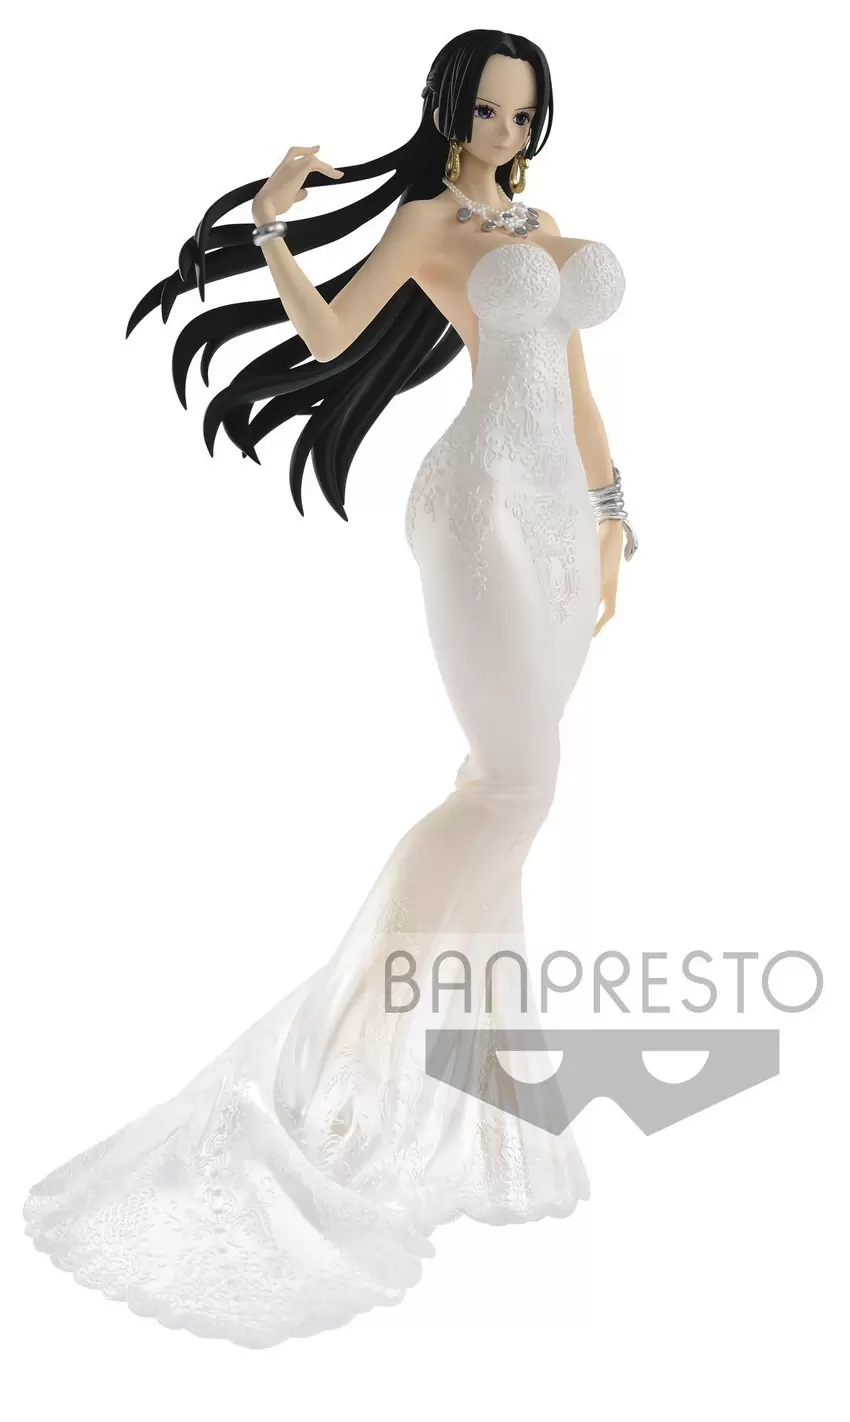 One Piece Banpresto - Boa Hancock - Lady Edge Wedding (Blanche)